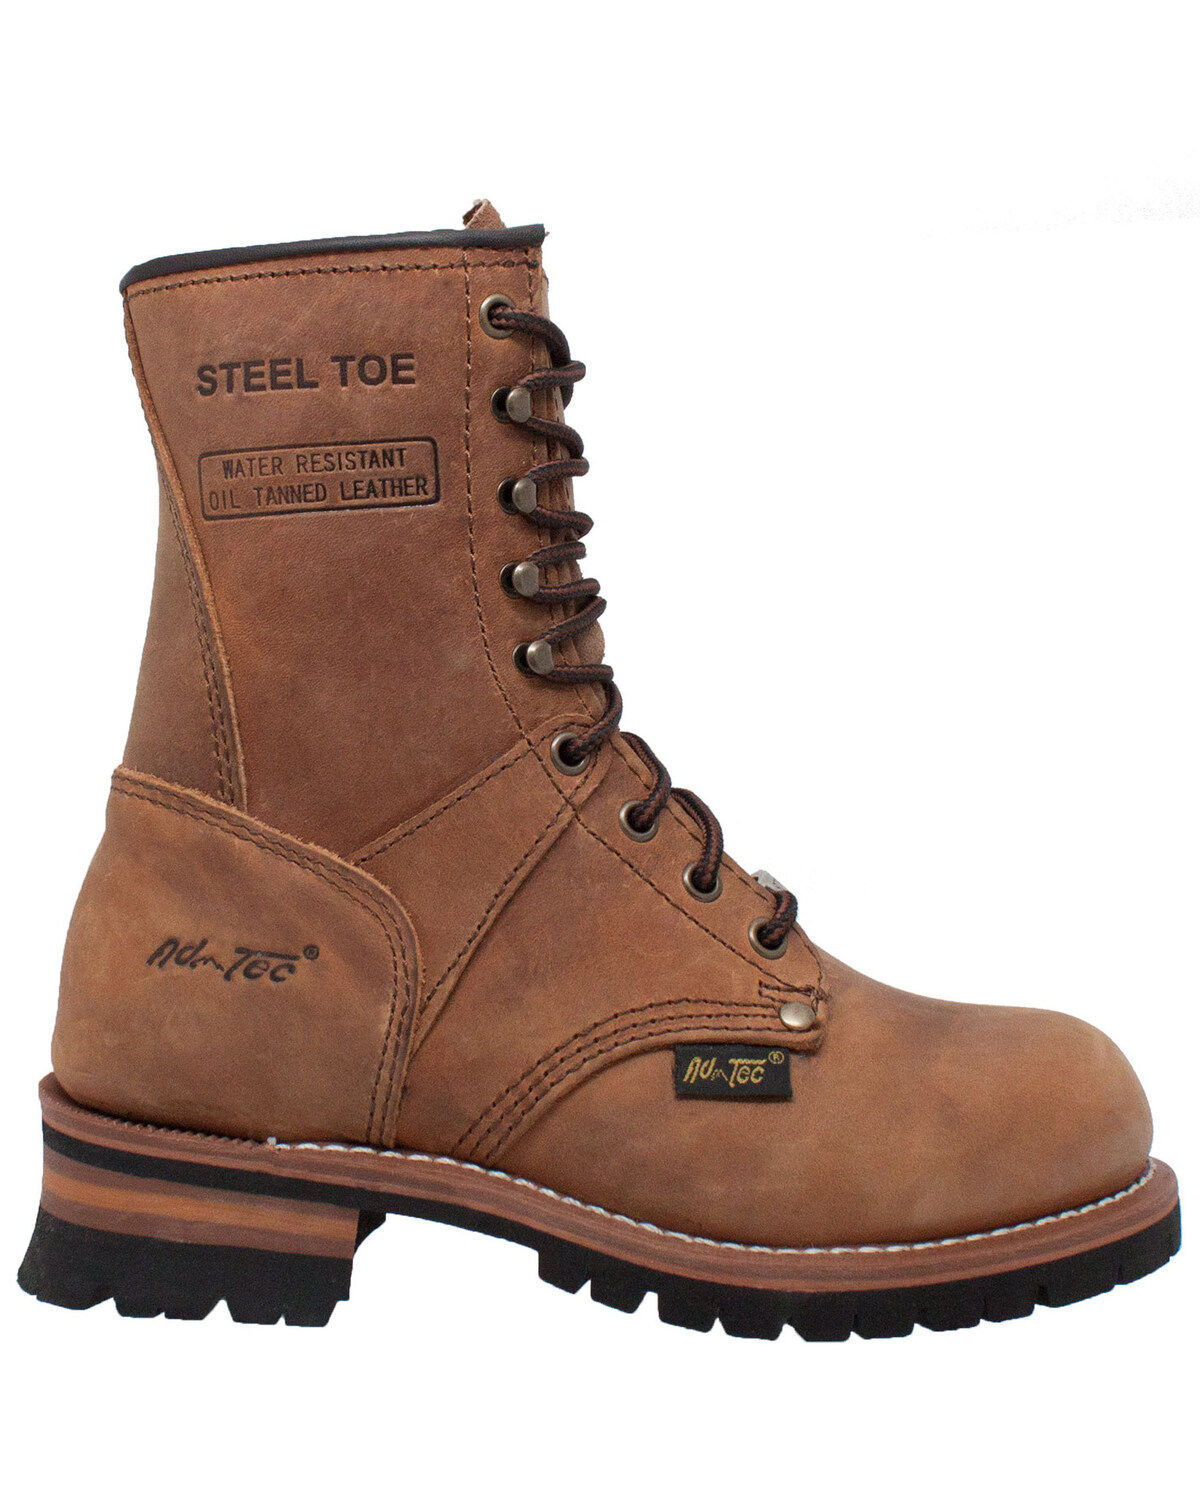 adtec women's steel toe boots